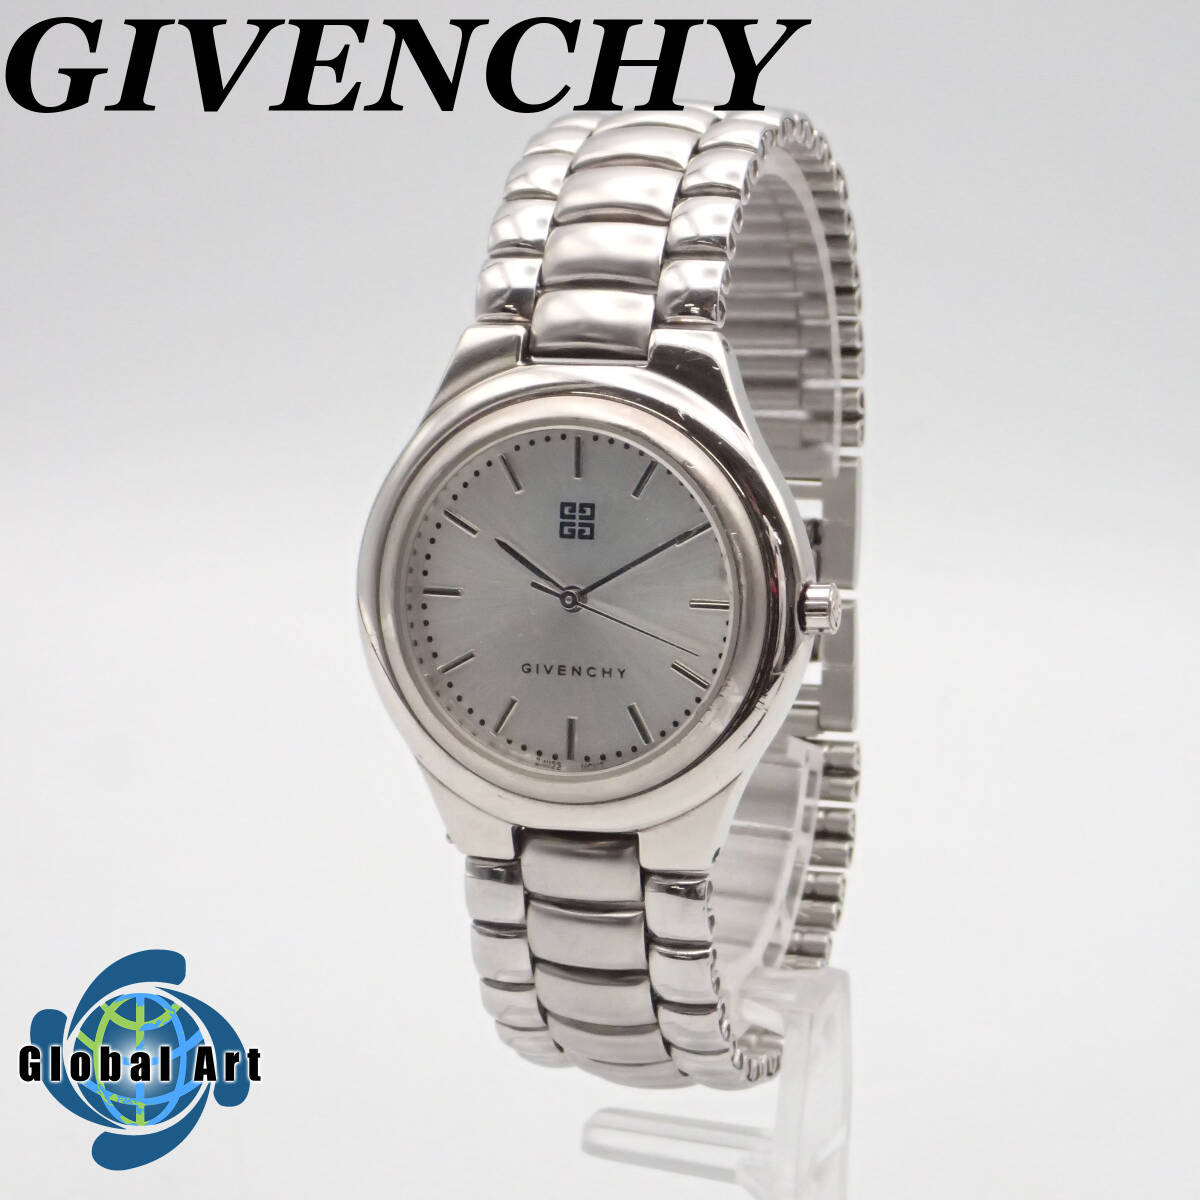 e04086/GIVENCHY Givenchy / quarts / men's wristwatch / face silver 